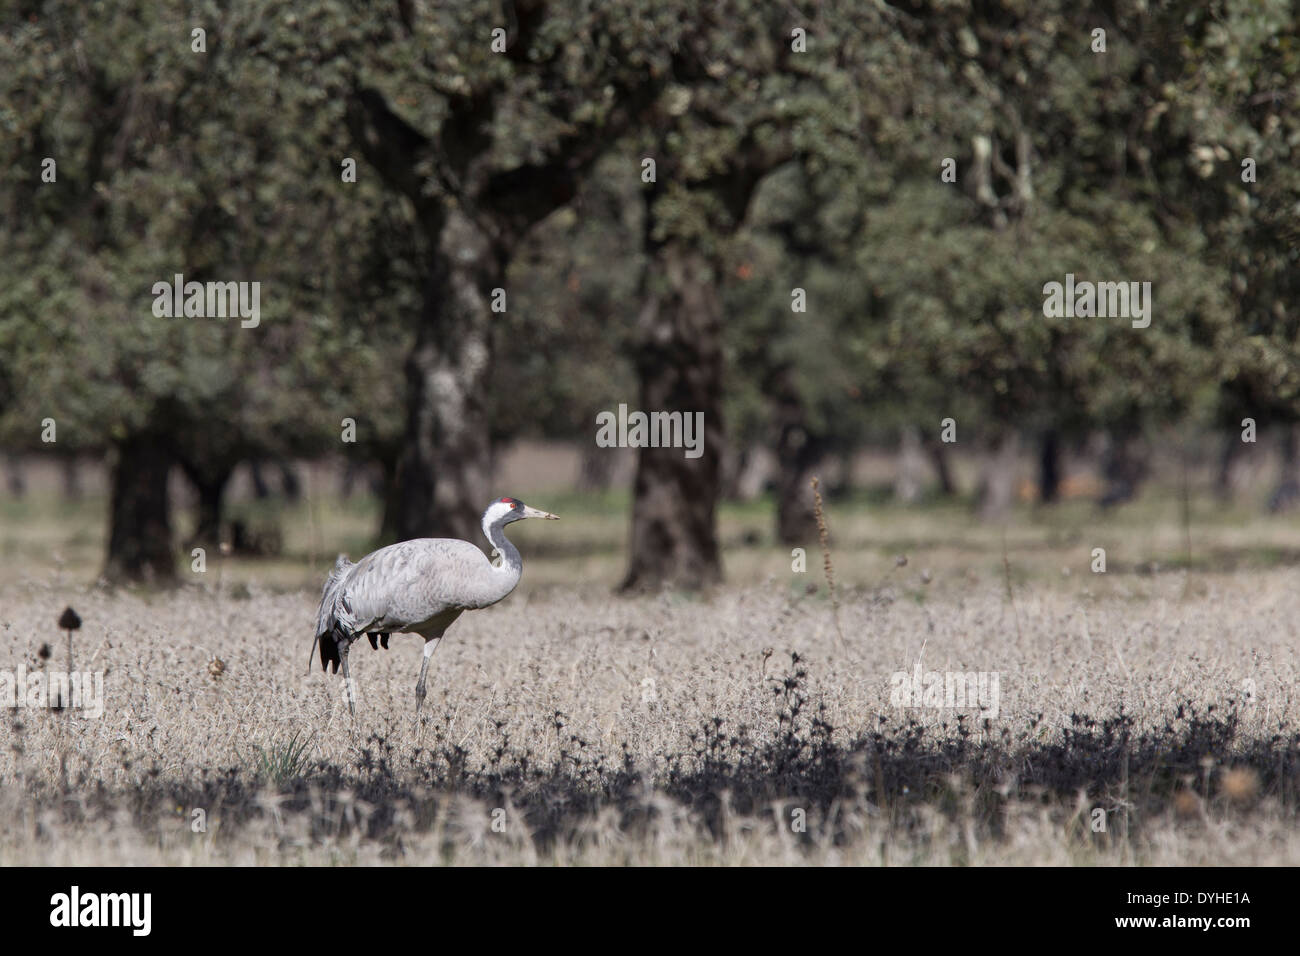 Common Crane, Eurasian Crane, Grus grus, Kranich, Extremadura, Spain, adult crane in dehesa with oak trees Stock Photo